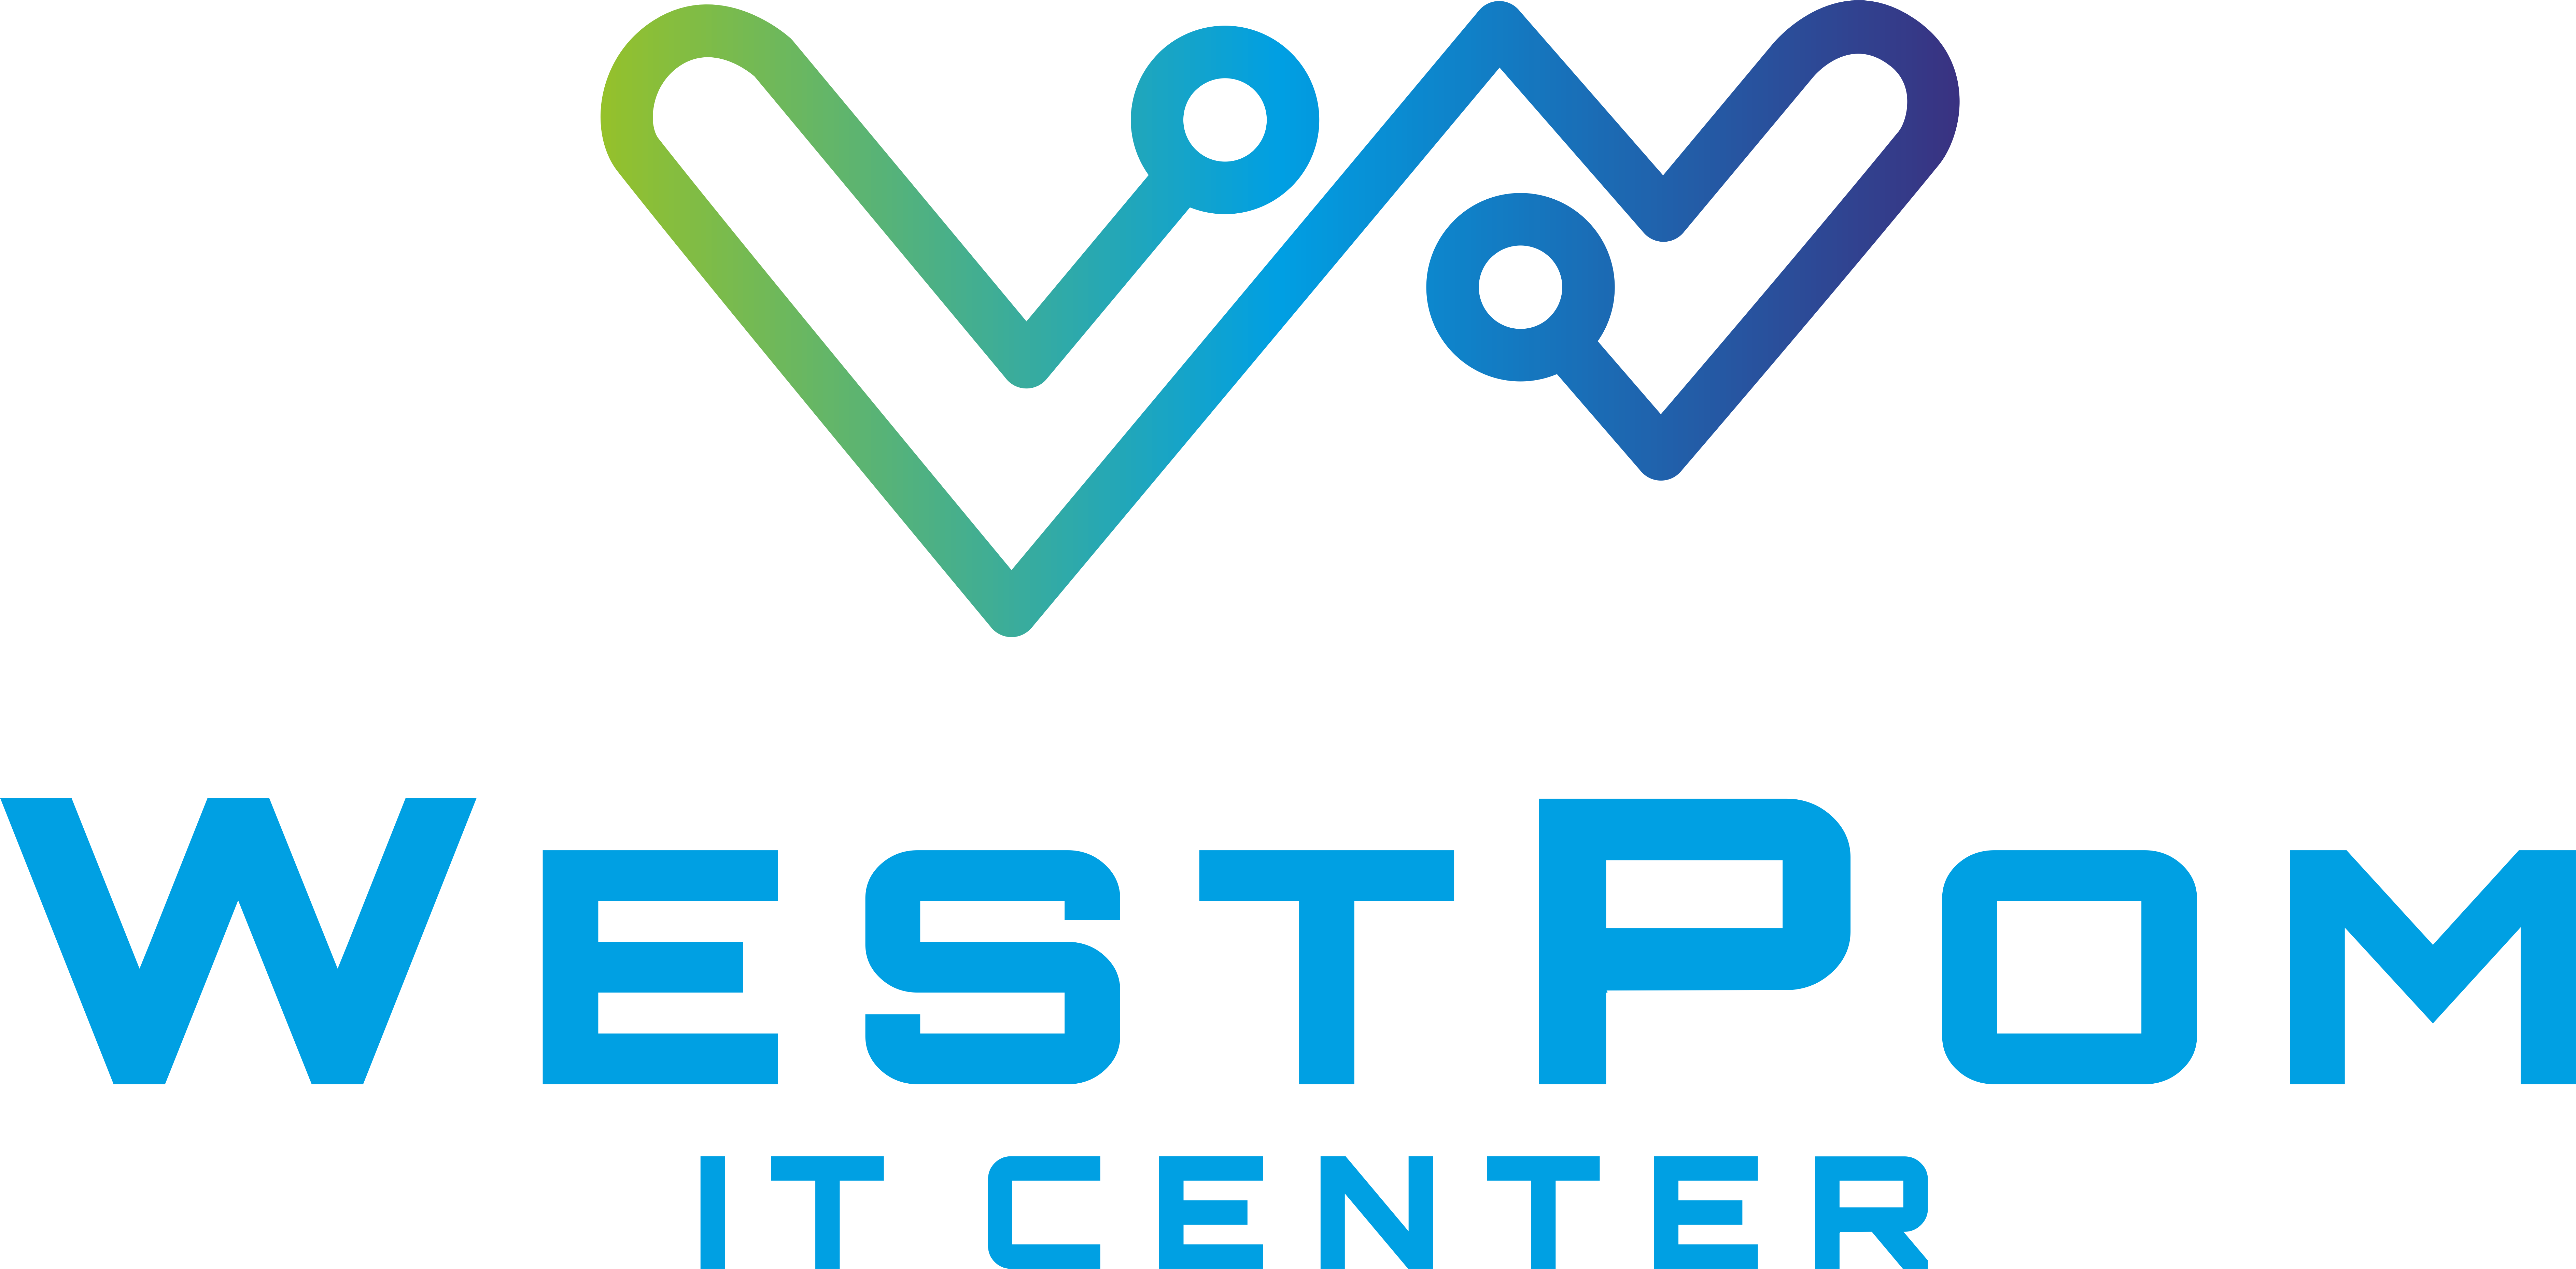 Westpom IT Center Logo